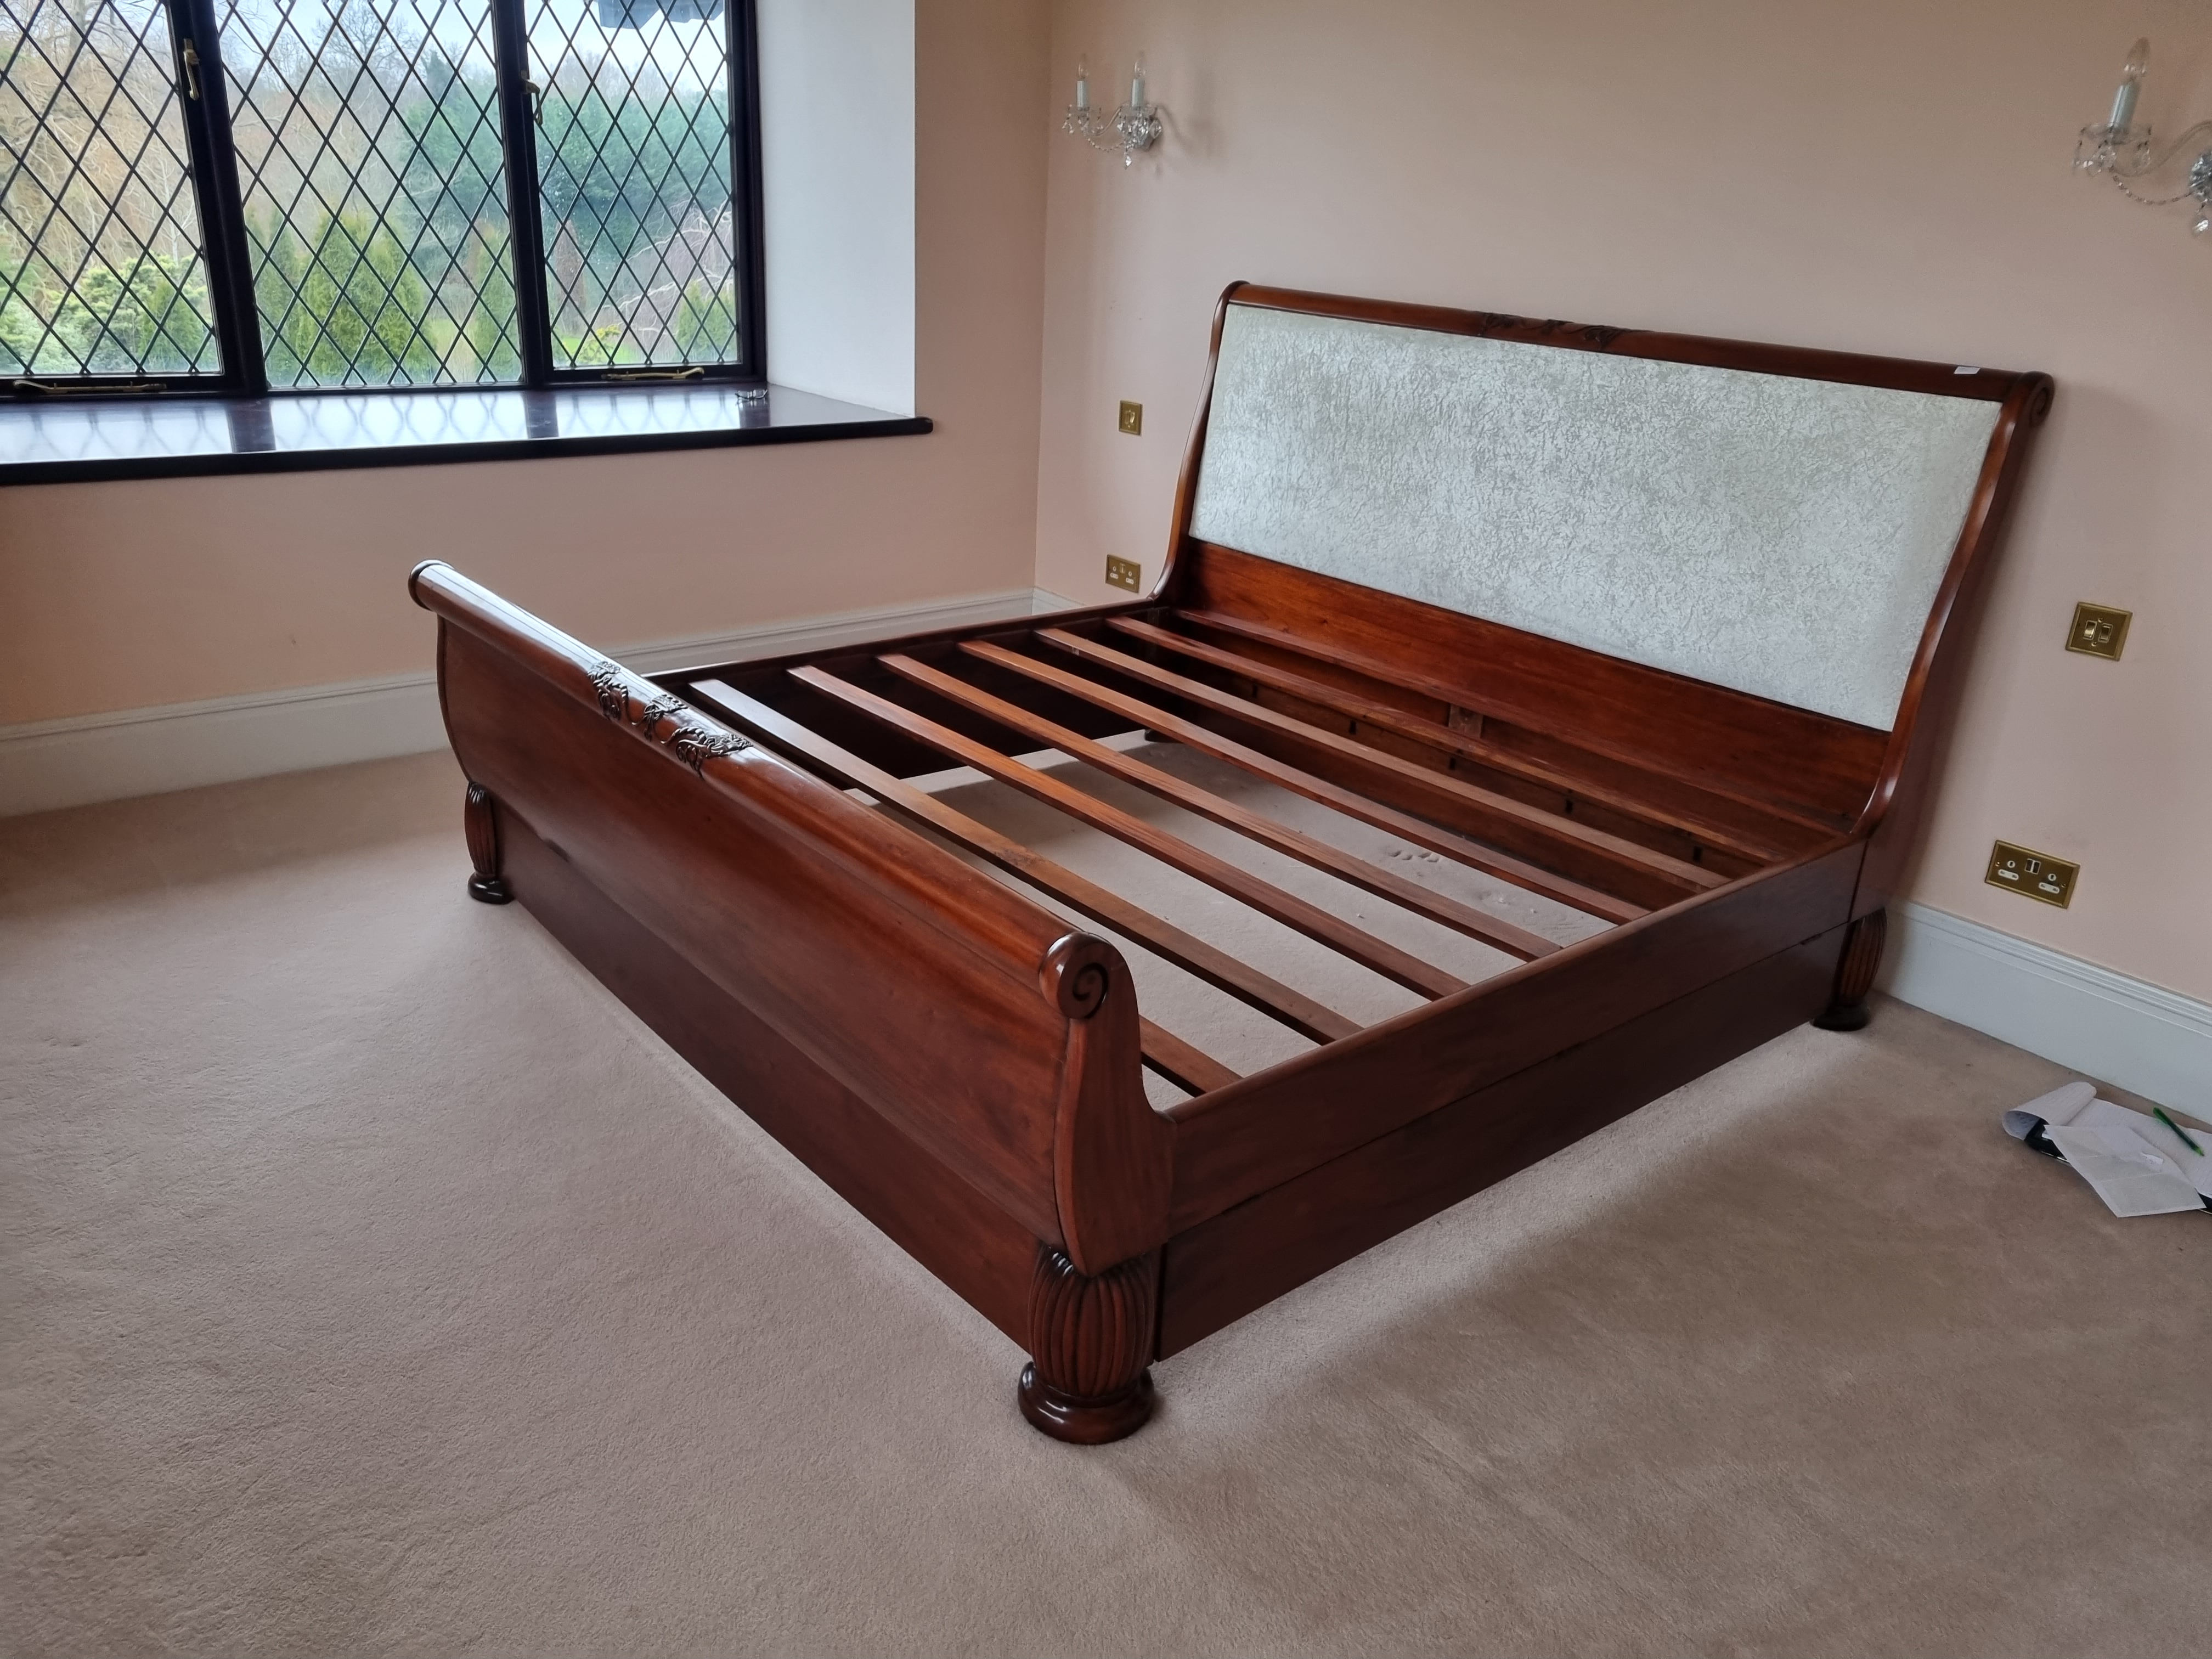 Mahogany sleigh bed with fabric headboard